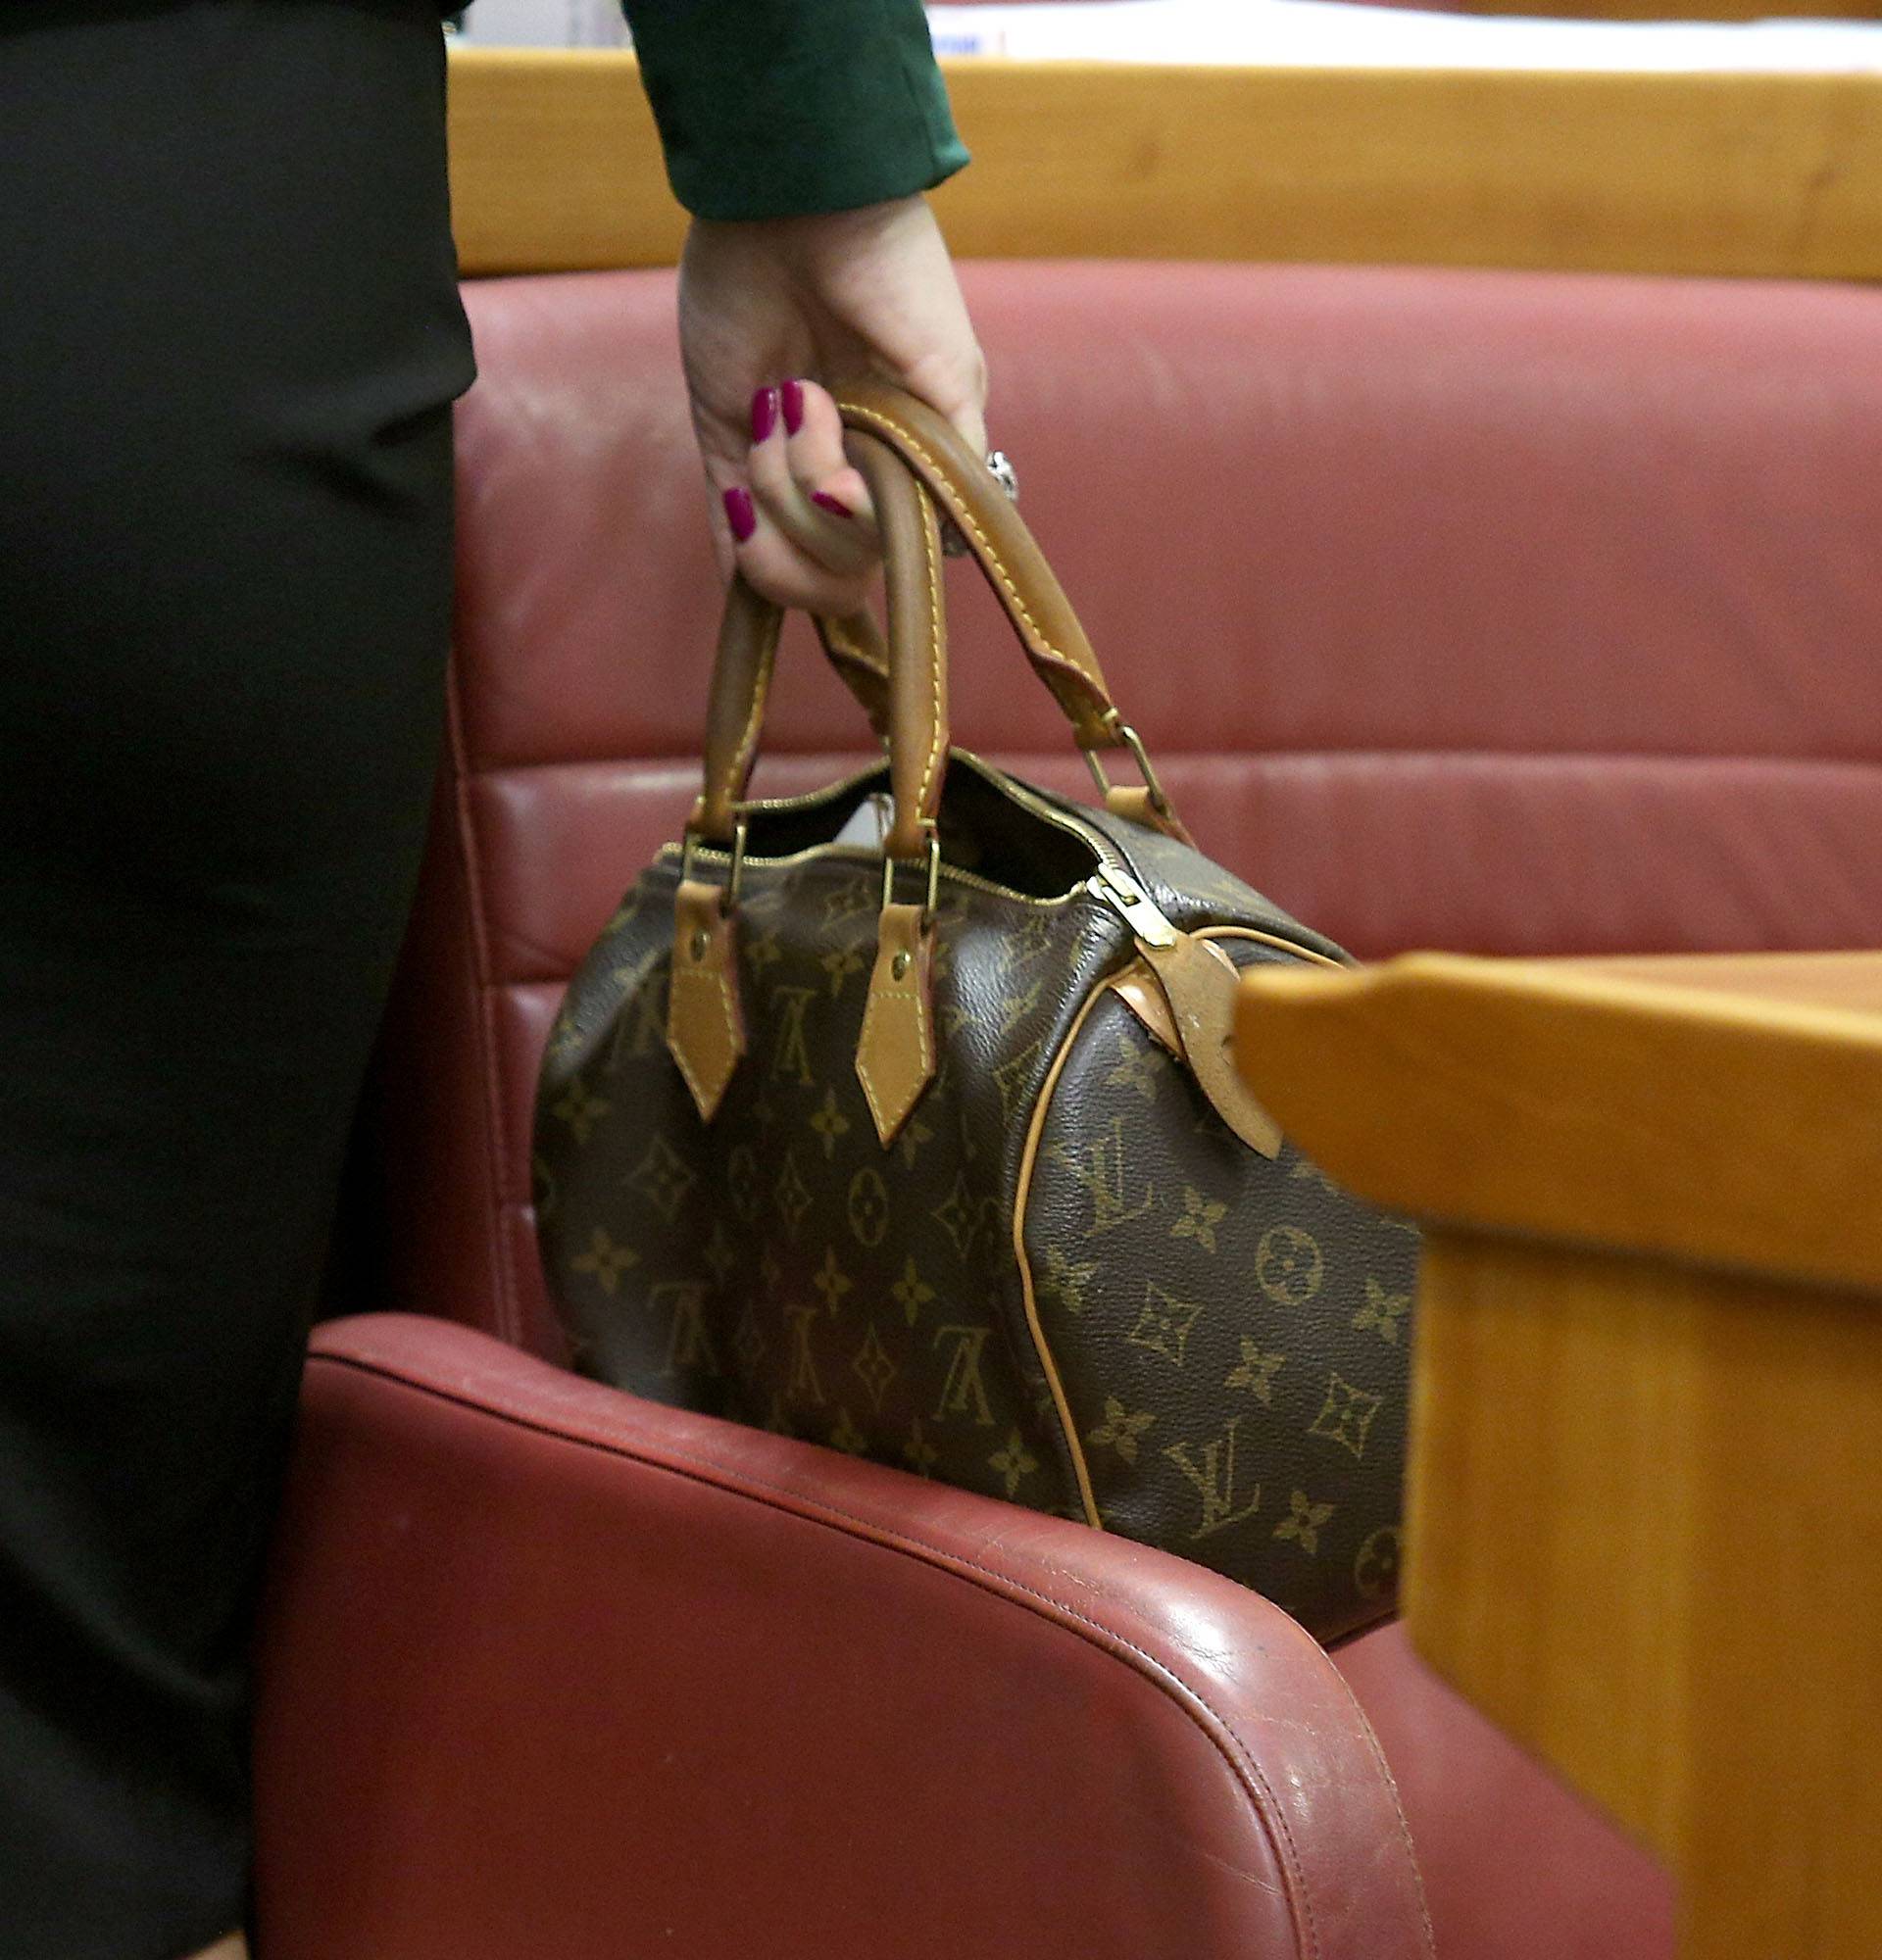 Mađerić u Saboru prošetala svoju Louis Vuitton torbicu